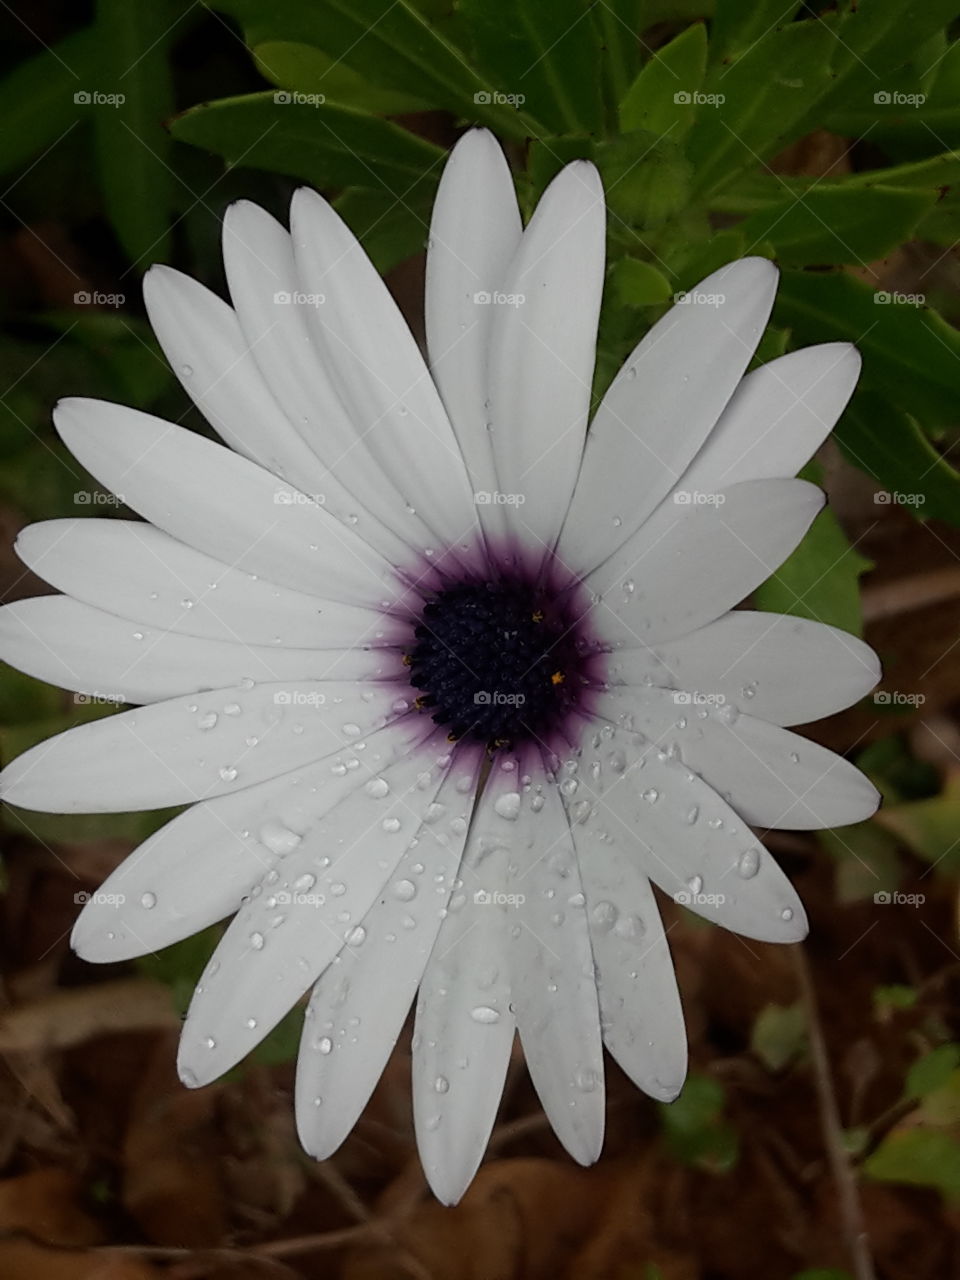 the beautiful flower!